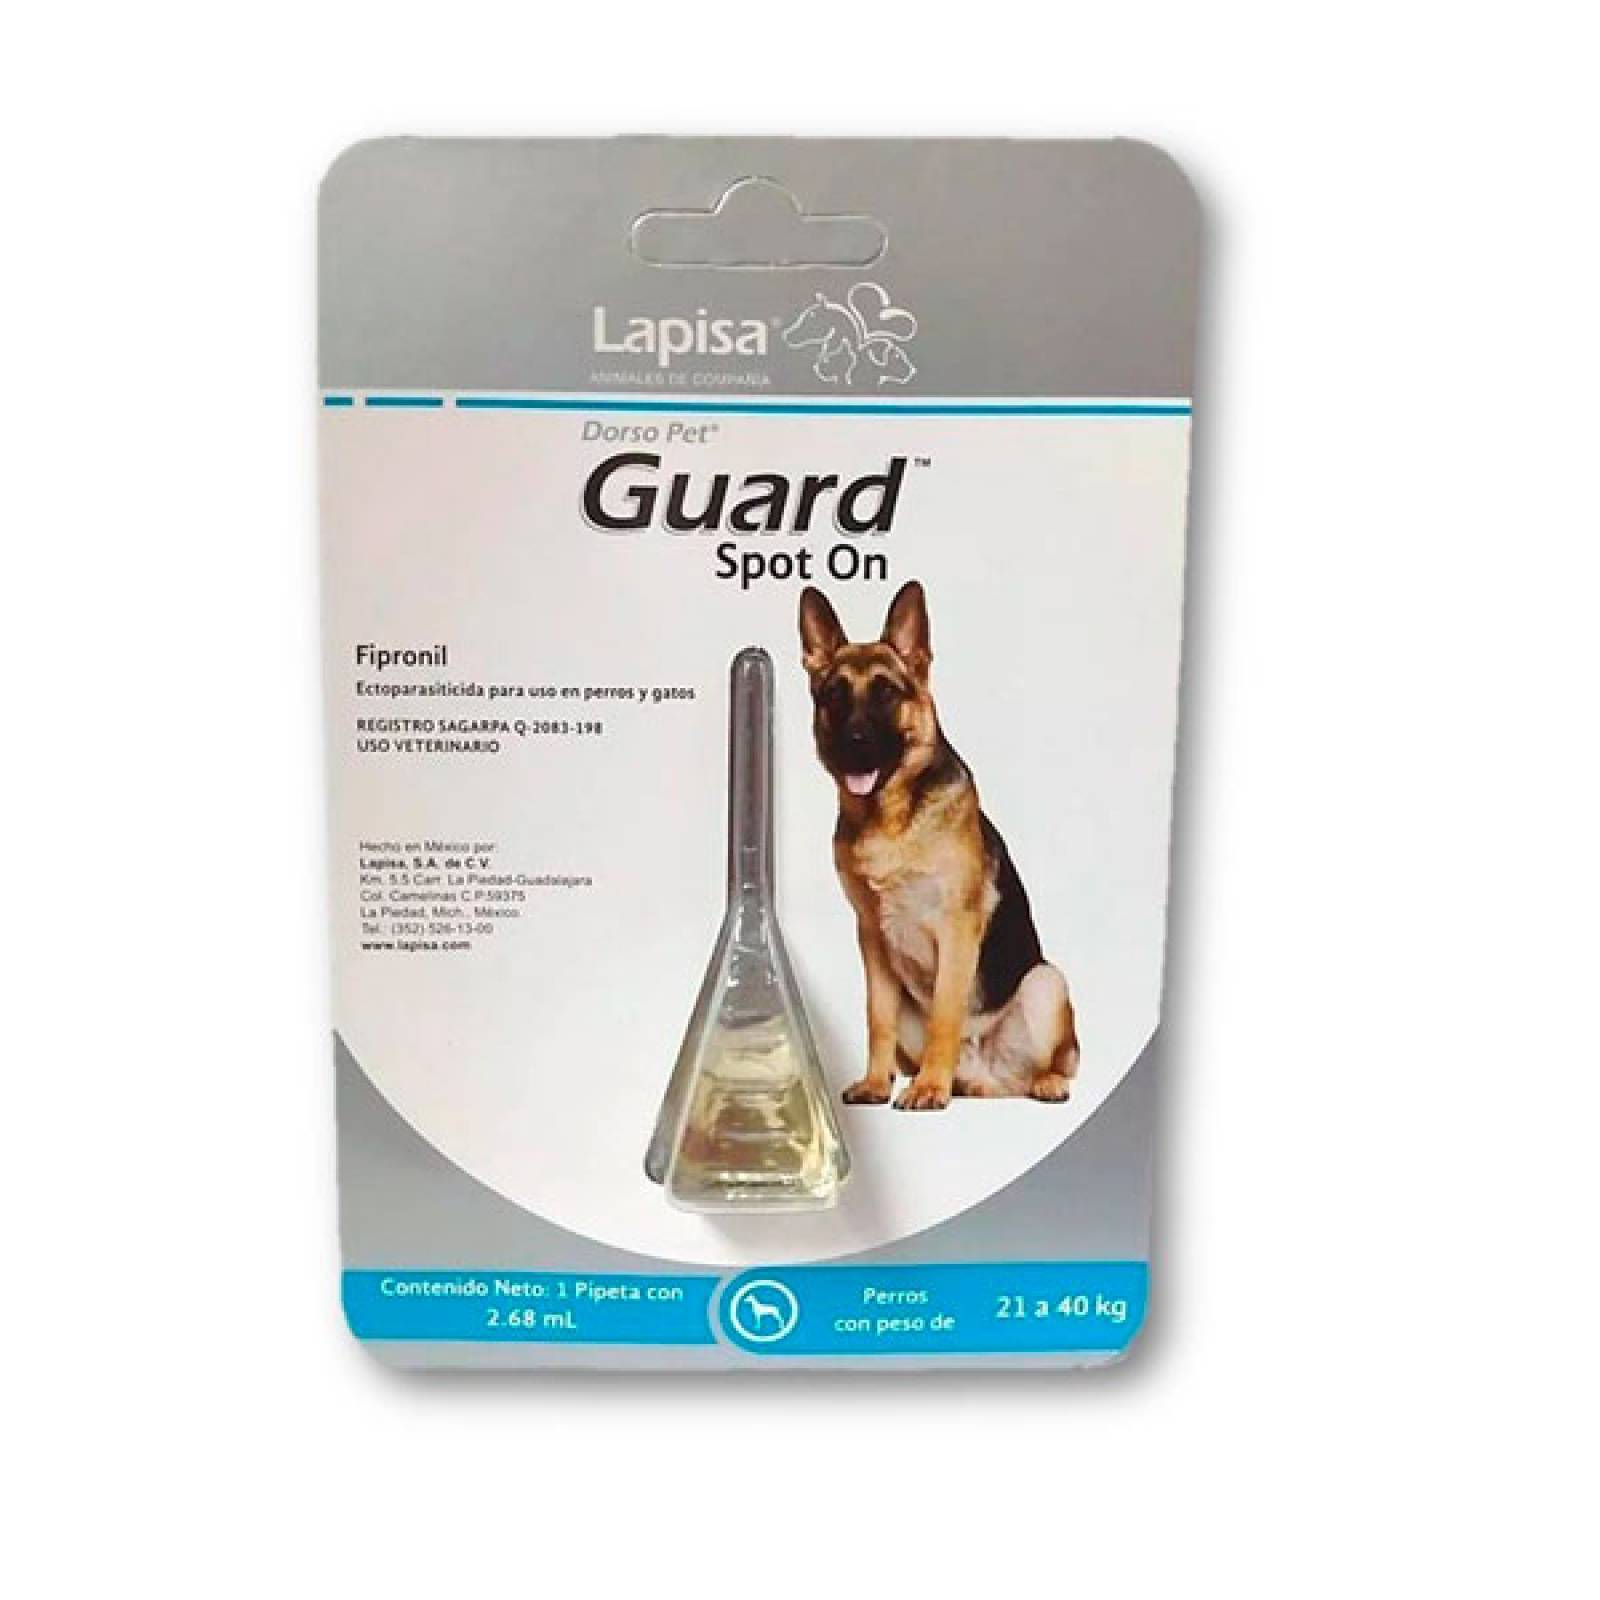 Dorso Pet Guard Spot para Perro Mediano 1 pipeta x 1.34 ml